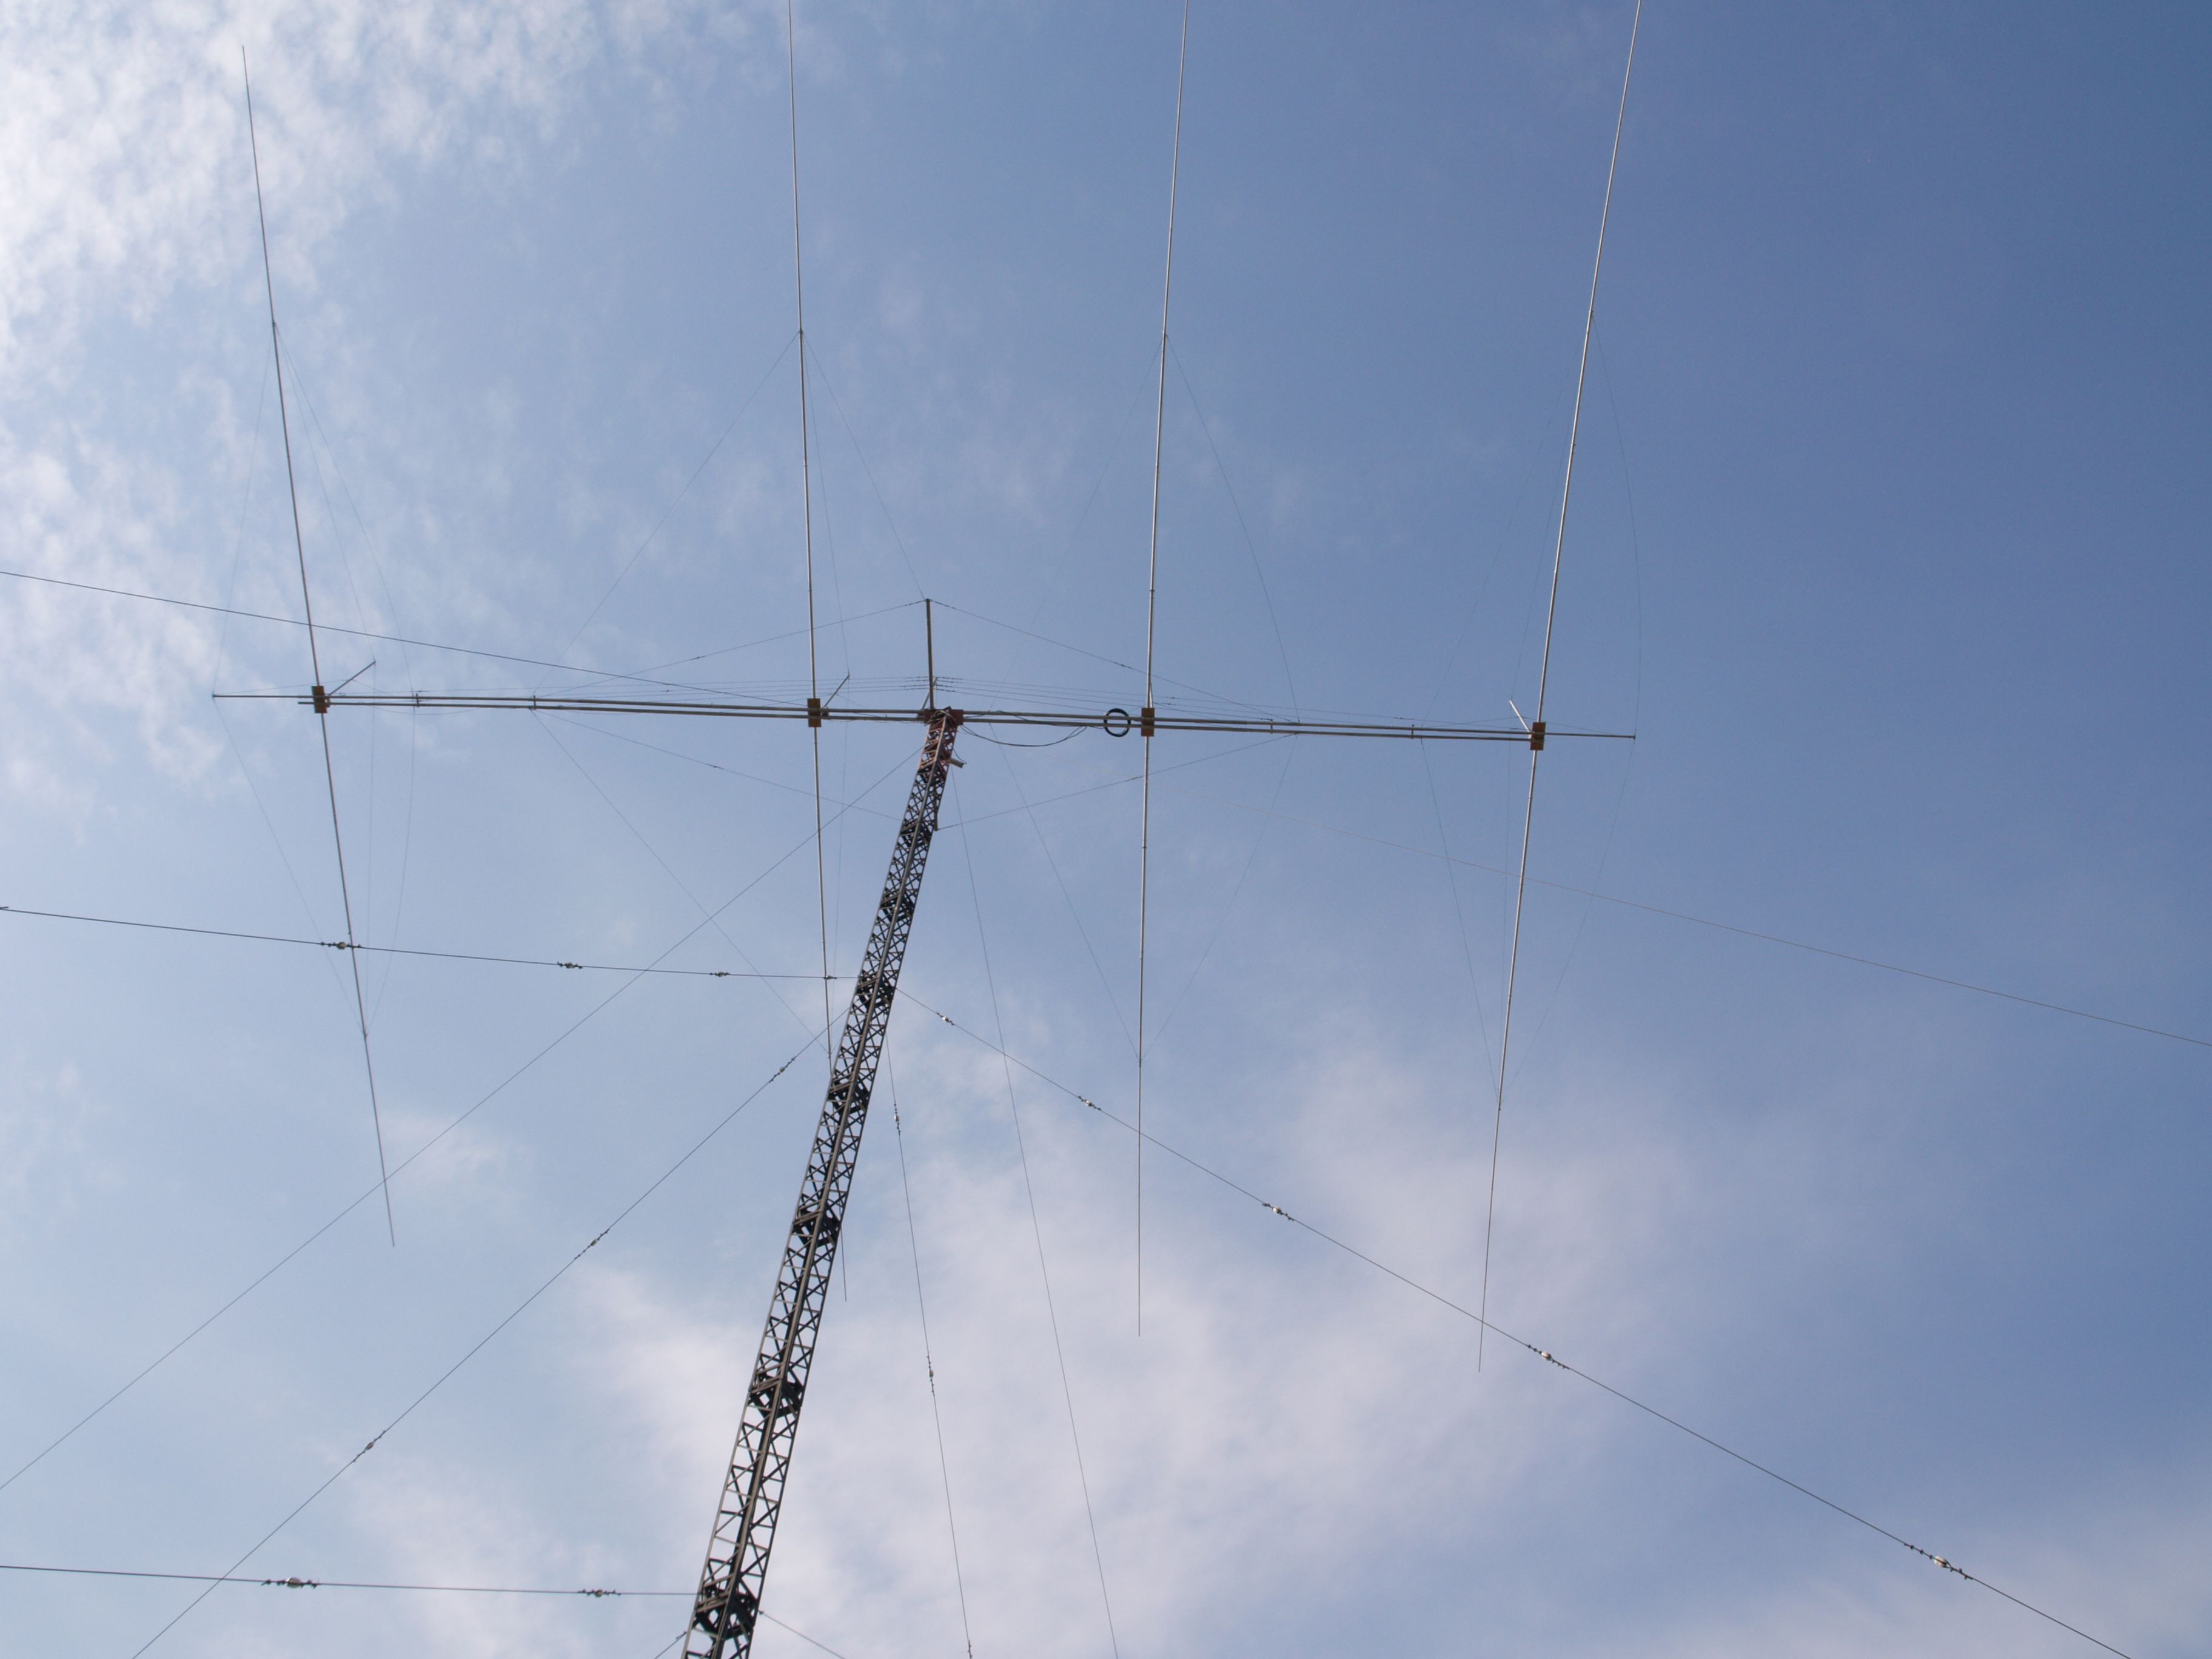 The UA9SBQ Awesome Antenna!